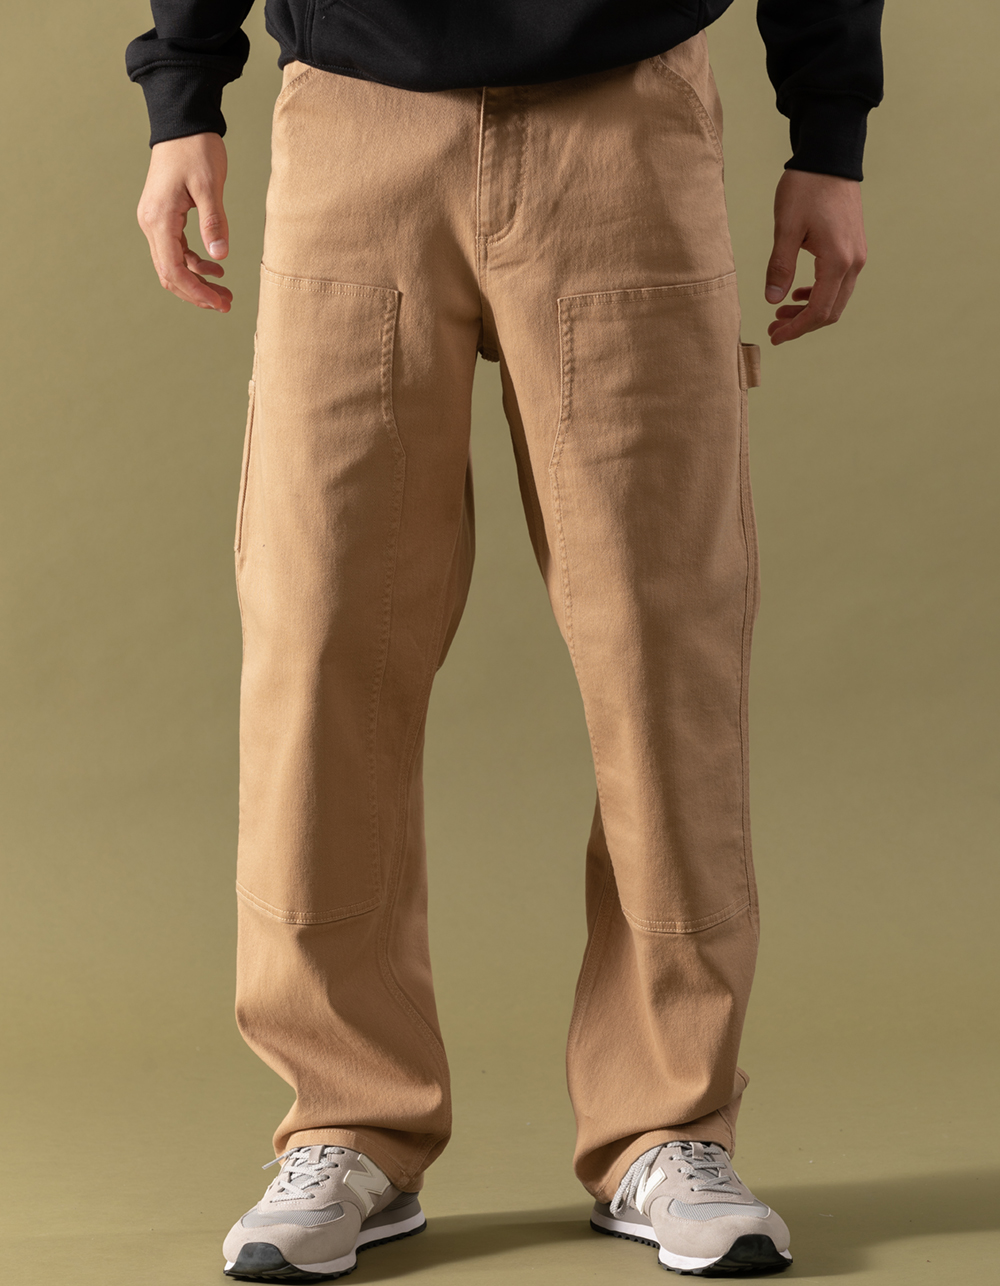 Slim Fit Cotton Twill Pants - Light gray - Men | H&M US